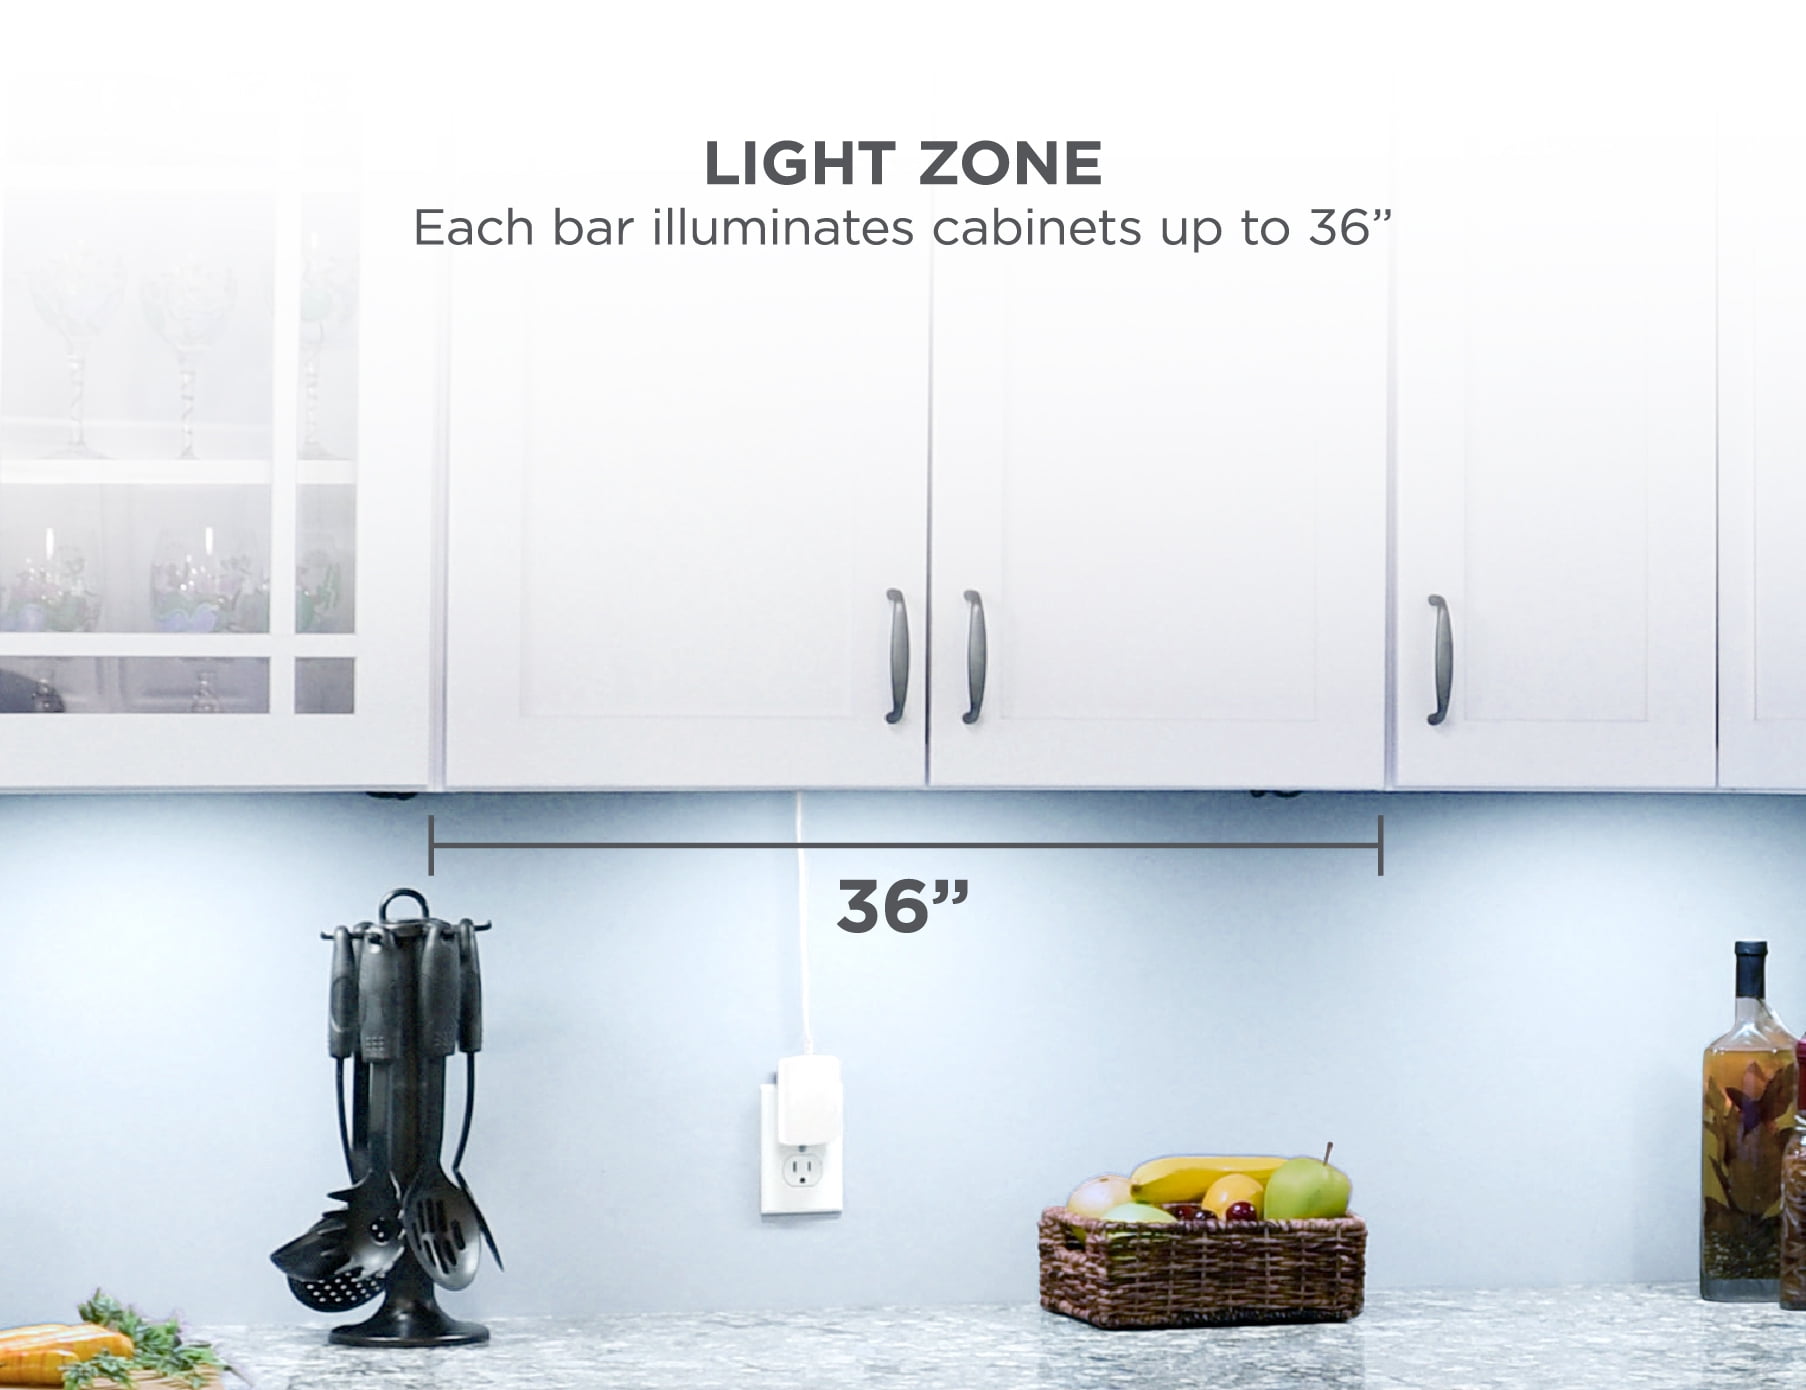 Black+decker 9 in. LED Warm White 1-Bar Rechargeable Under Cabinet Lighting Kit LEDUC9-1REC